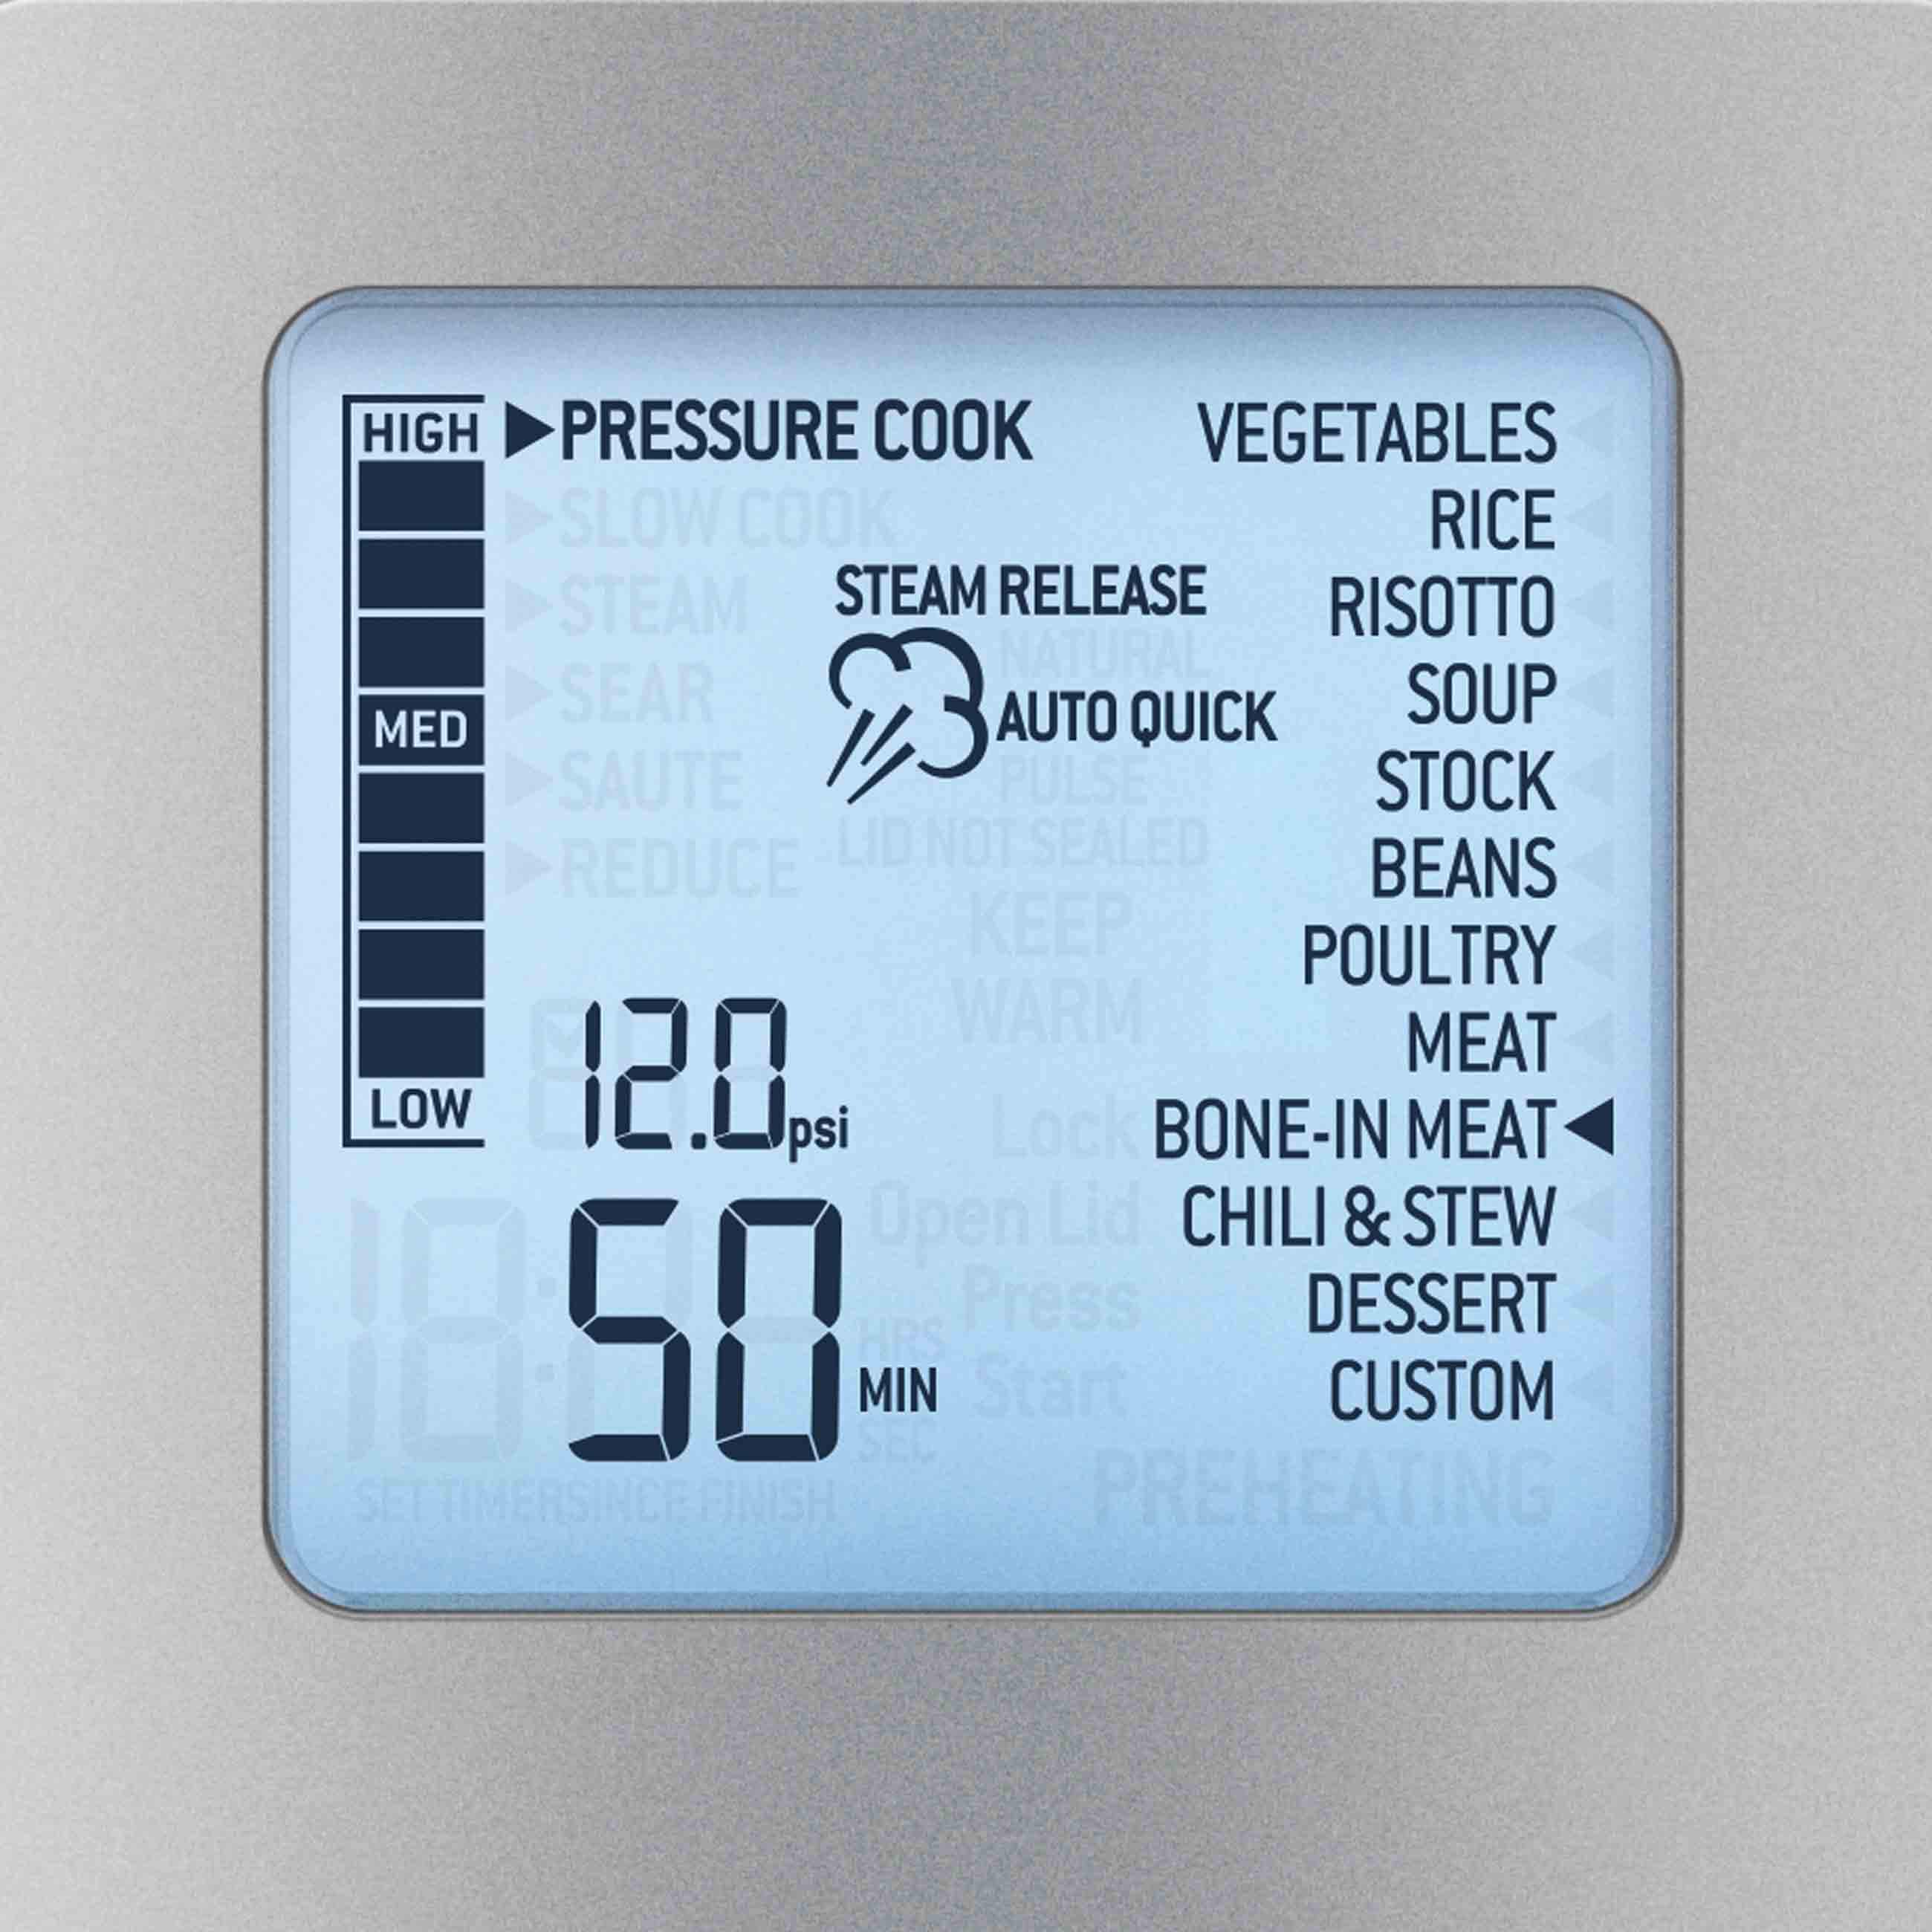 Breville 6 Qt Pro Pressure Slow Cooker - BPR700BSS